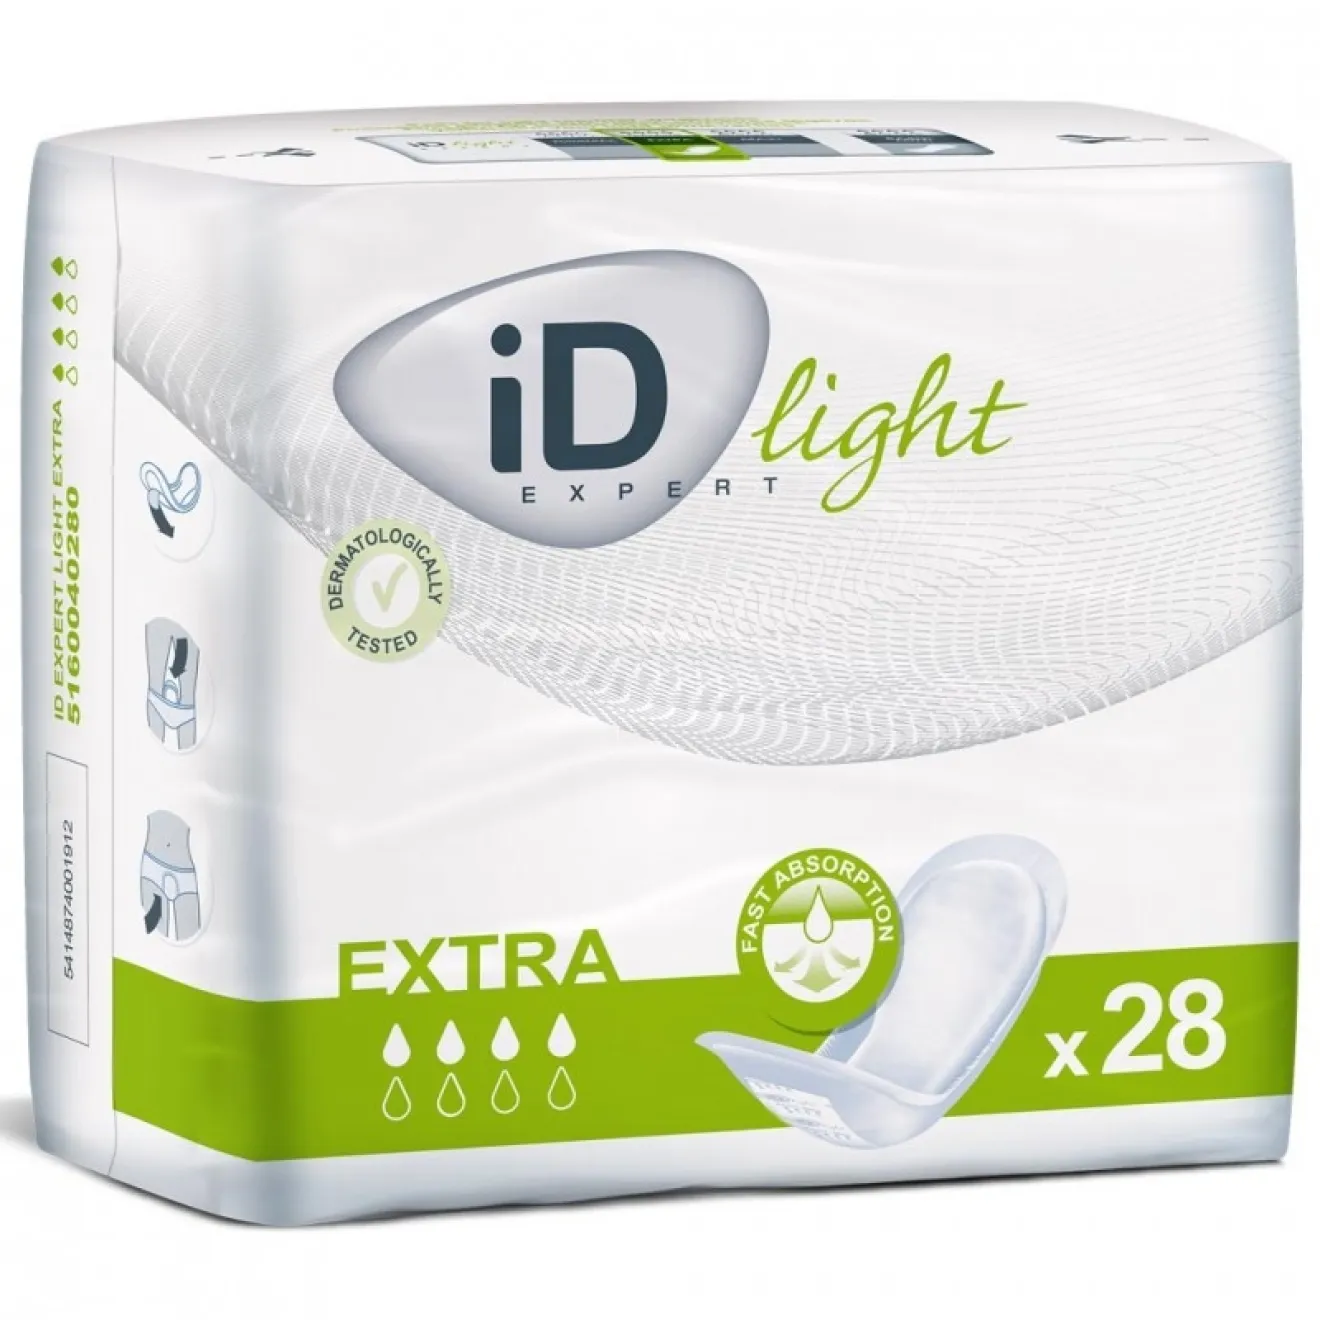 ID Expert light extra 28 ST